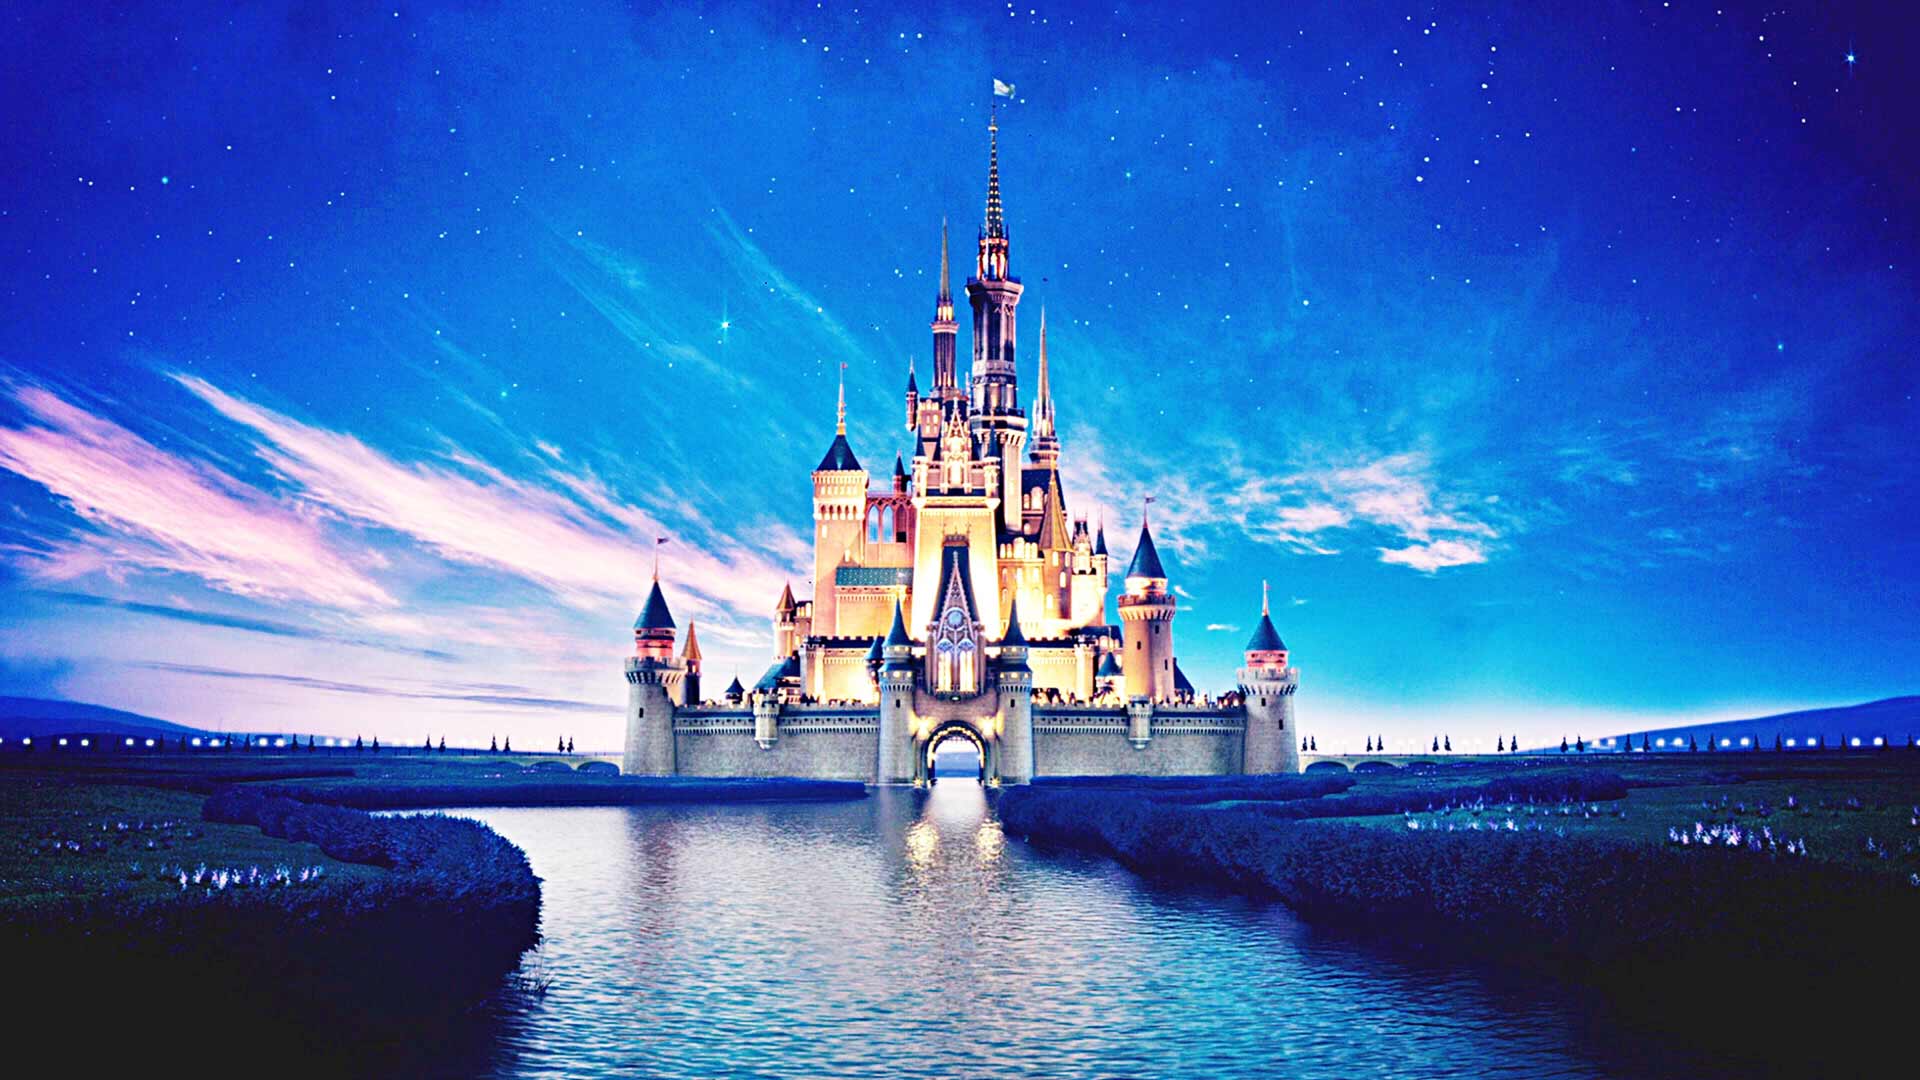 Disney Frozen Castle Wallpaper Images amp Pictures   Becuo